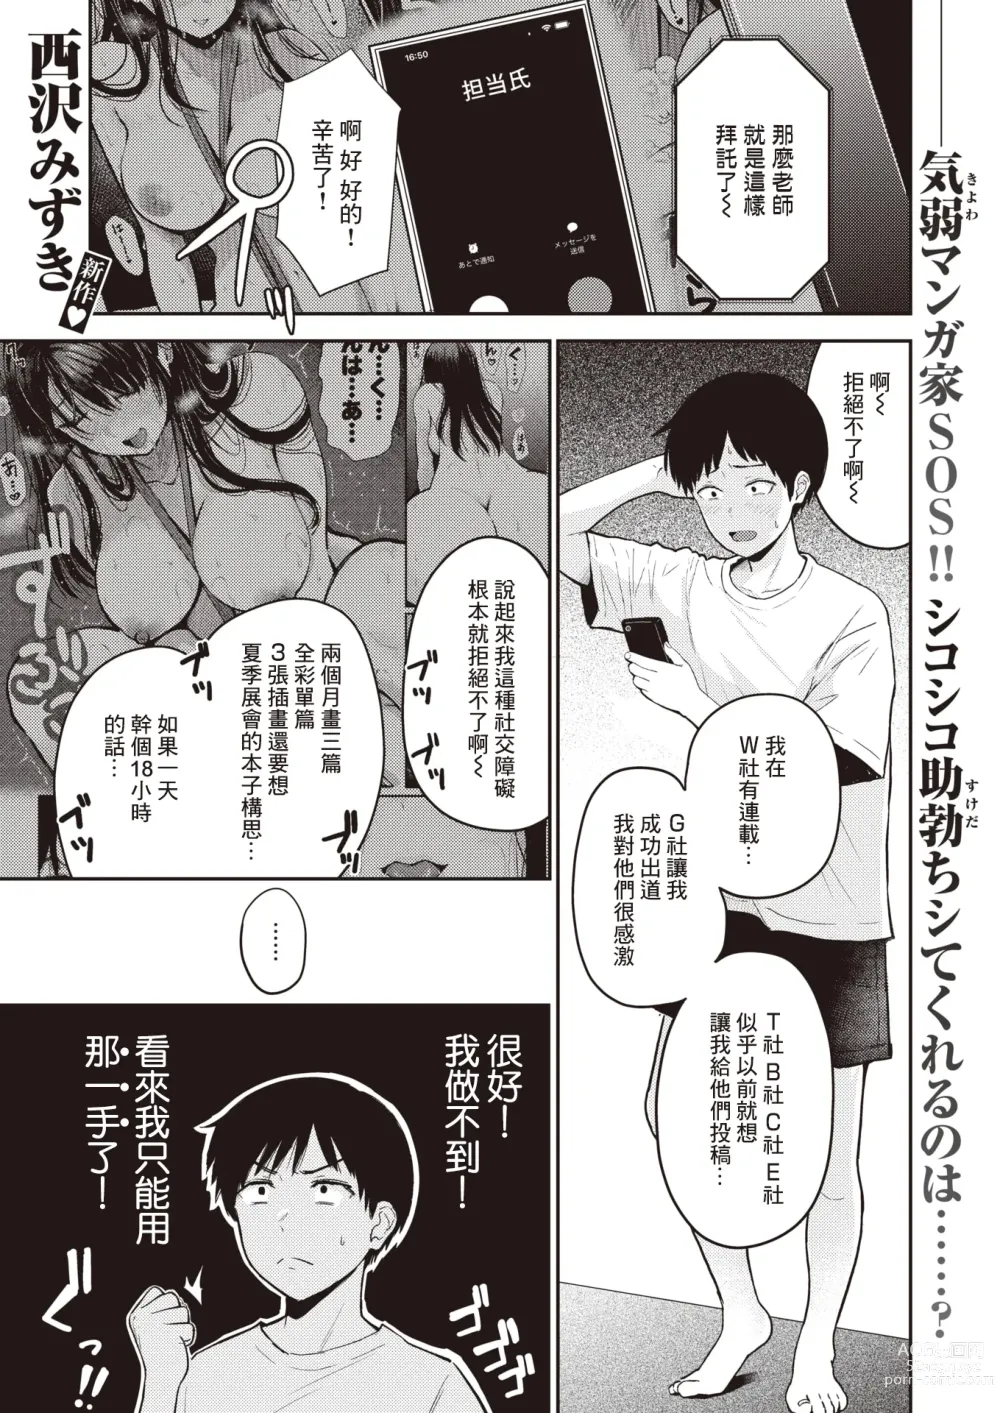 Page 1 of manga Bannou-gata!? Assistant